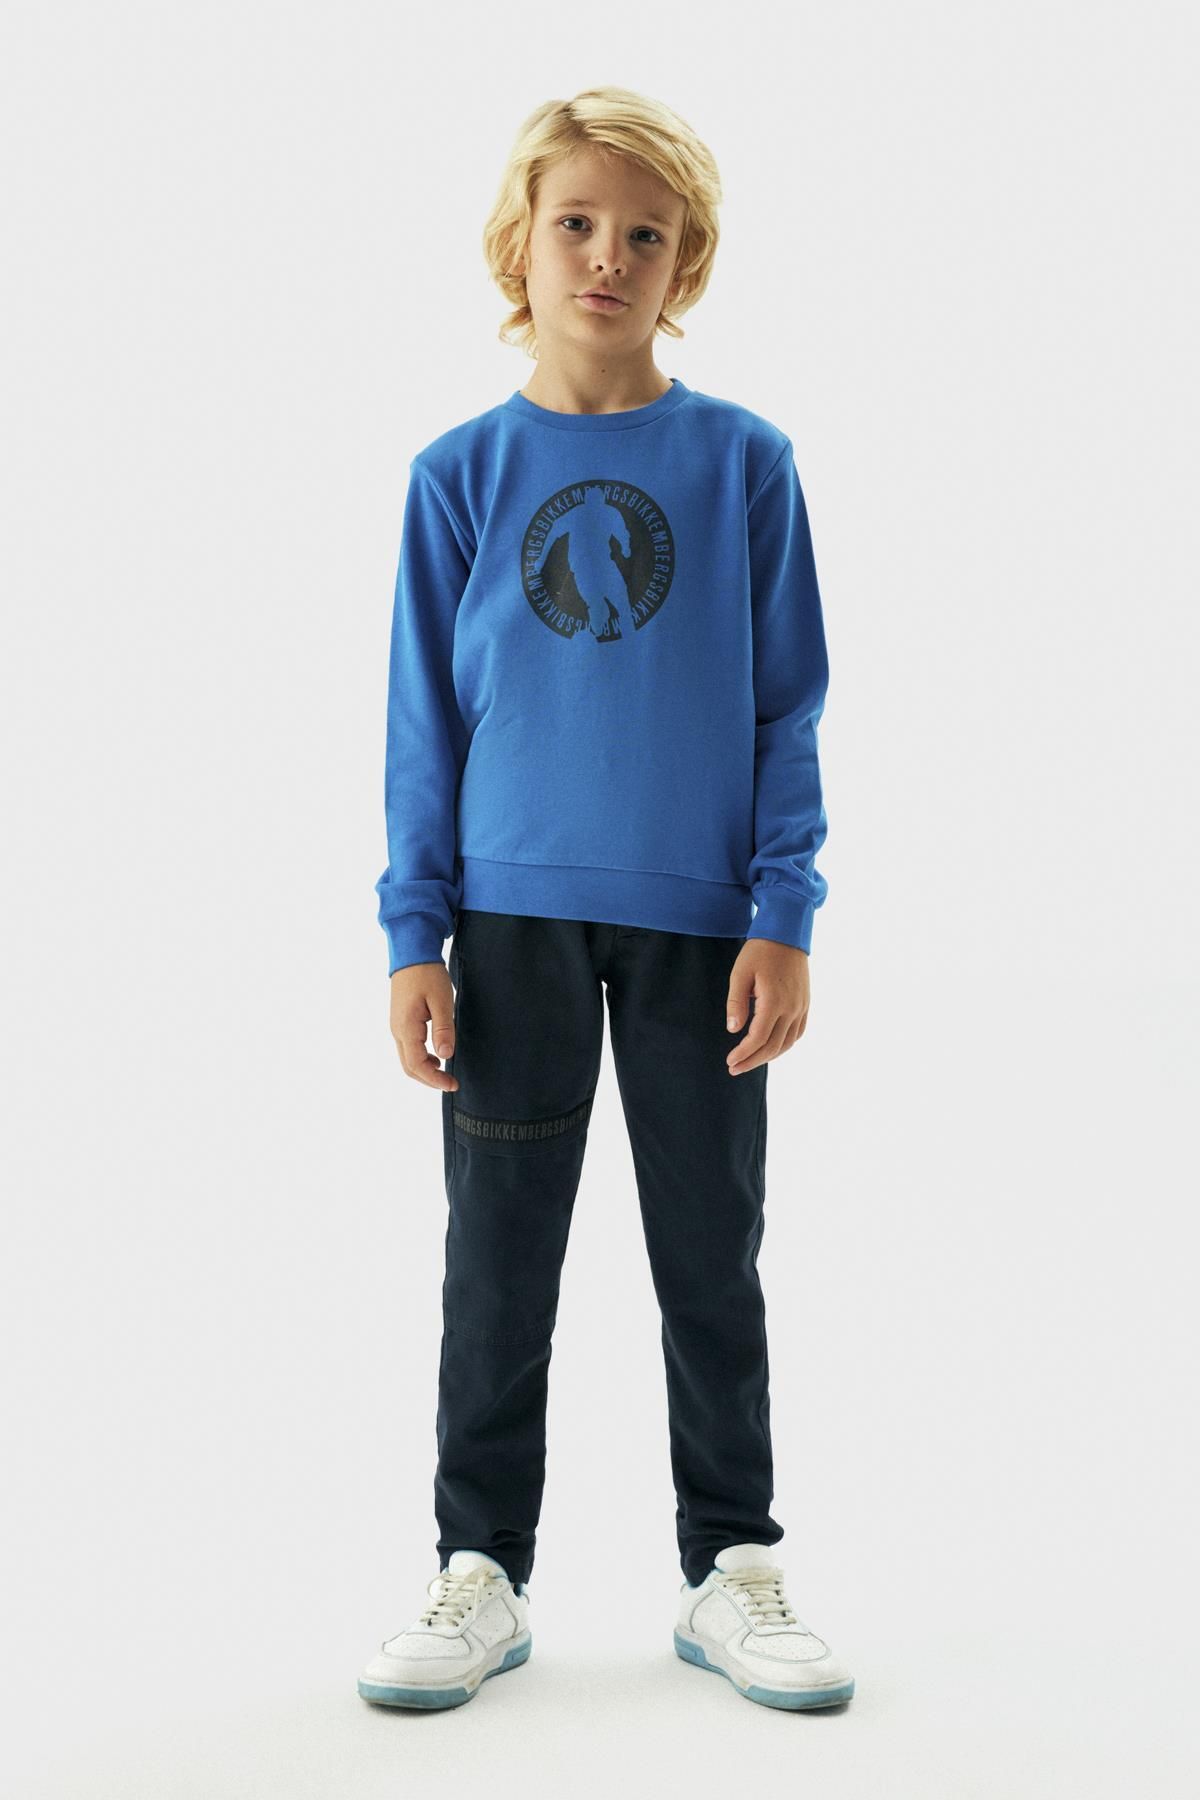 Bikkembergs Bg Store Erkek Çocuk Mavi Sweatshirt 23fw0bk1829